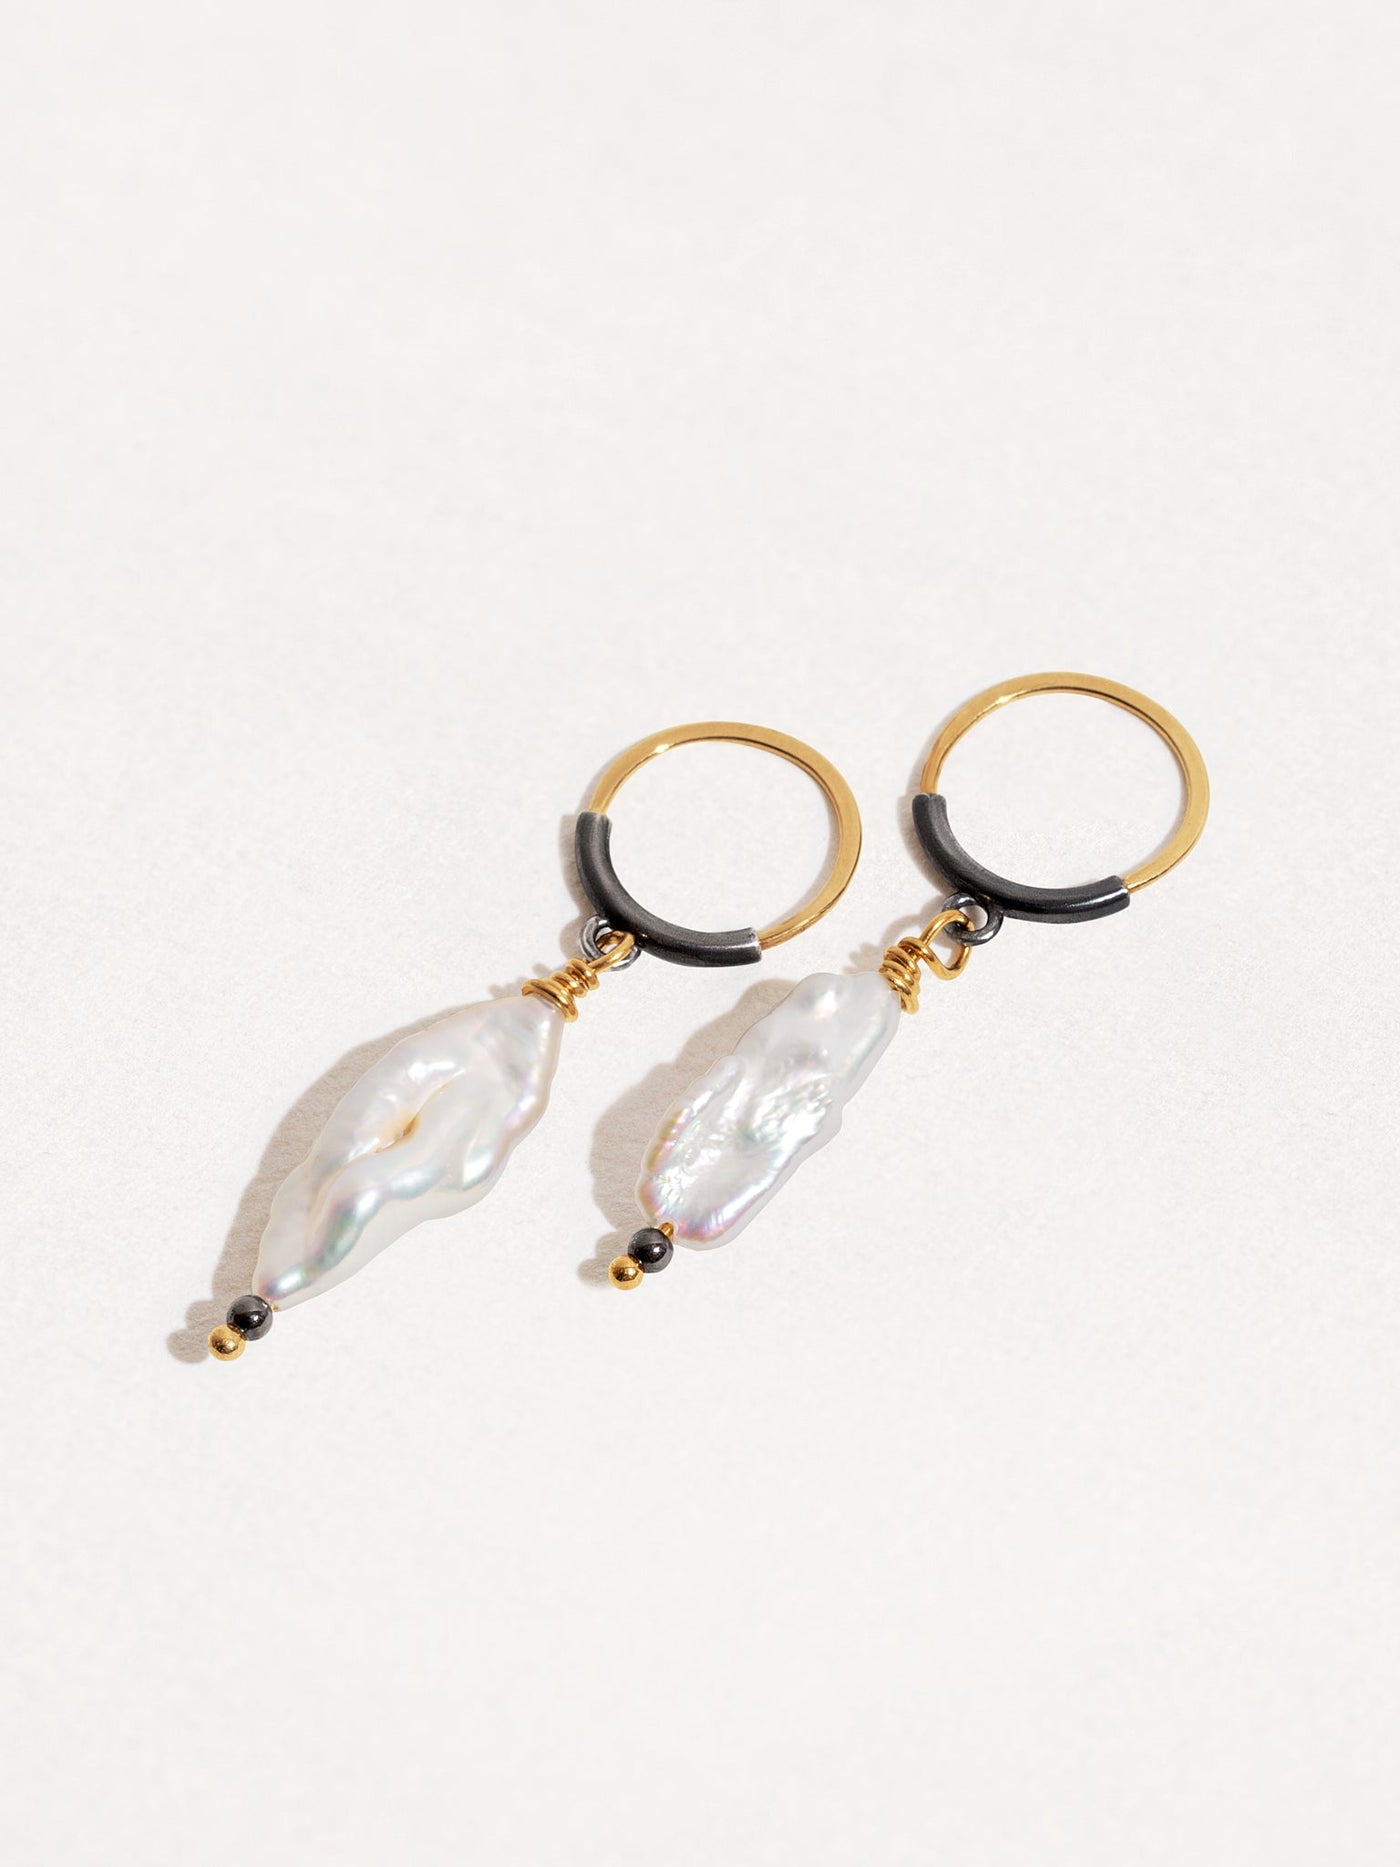 Nadi Gold Filled Ear Hoops with Pearls - 14K Gold Filled OxidePairankorBrooklyn Jewelry TrendsLunai Jewelry